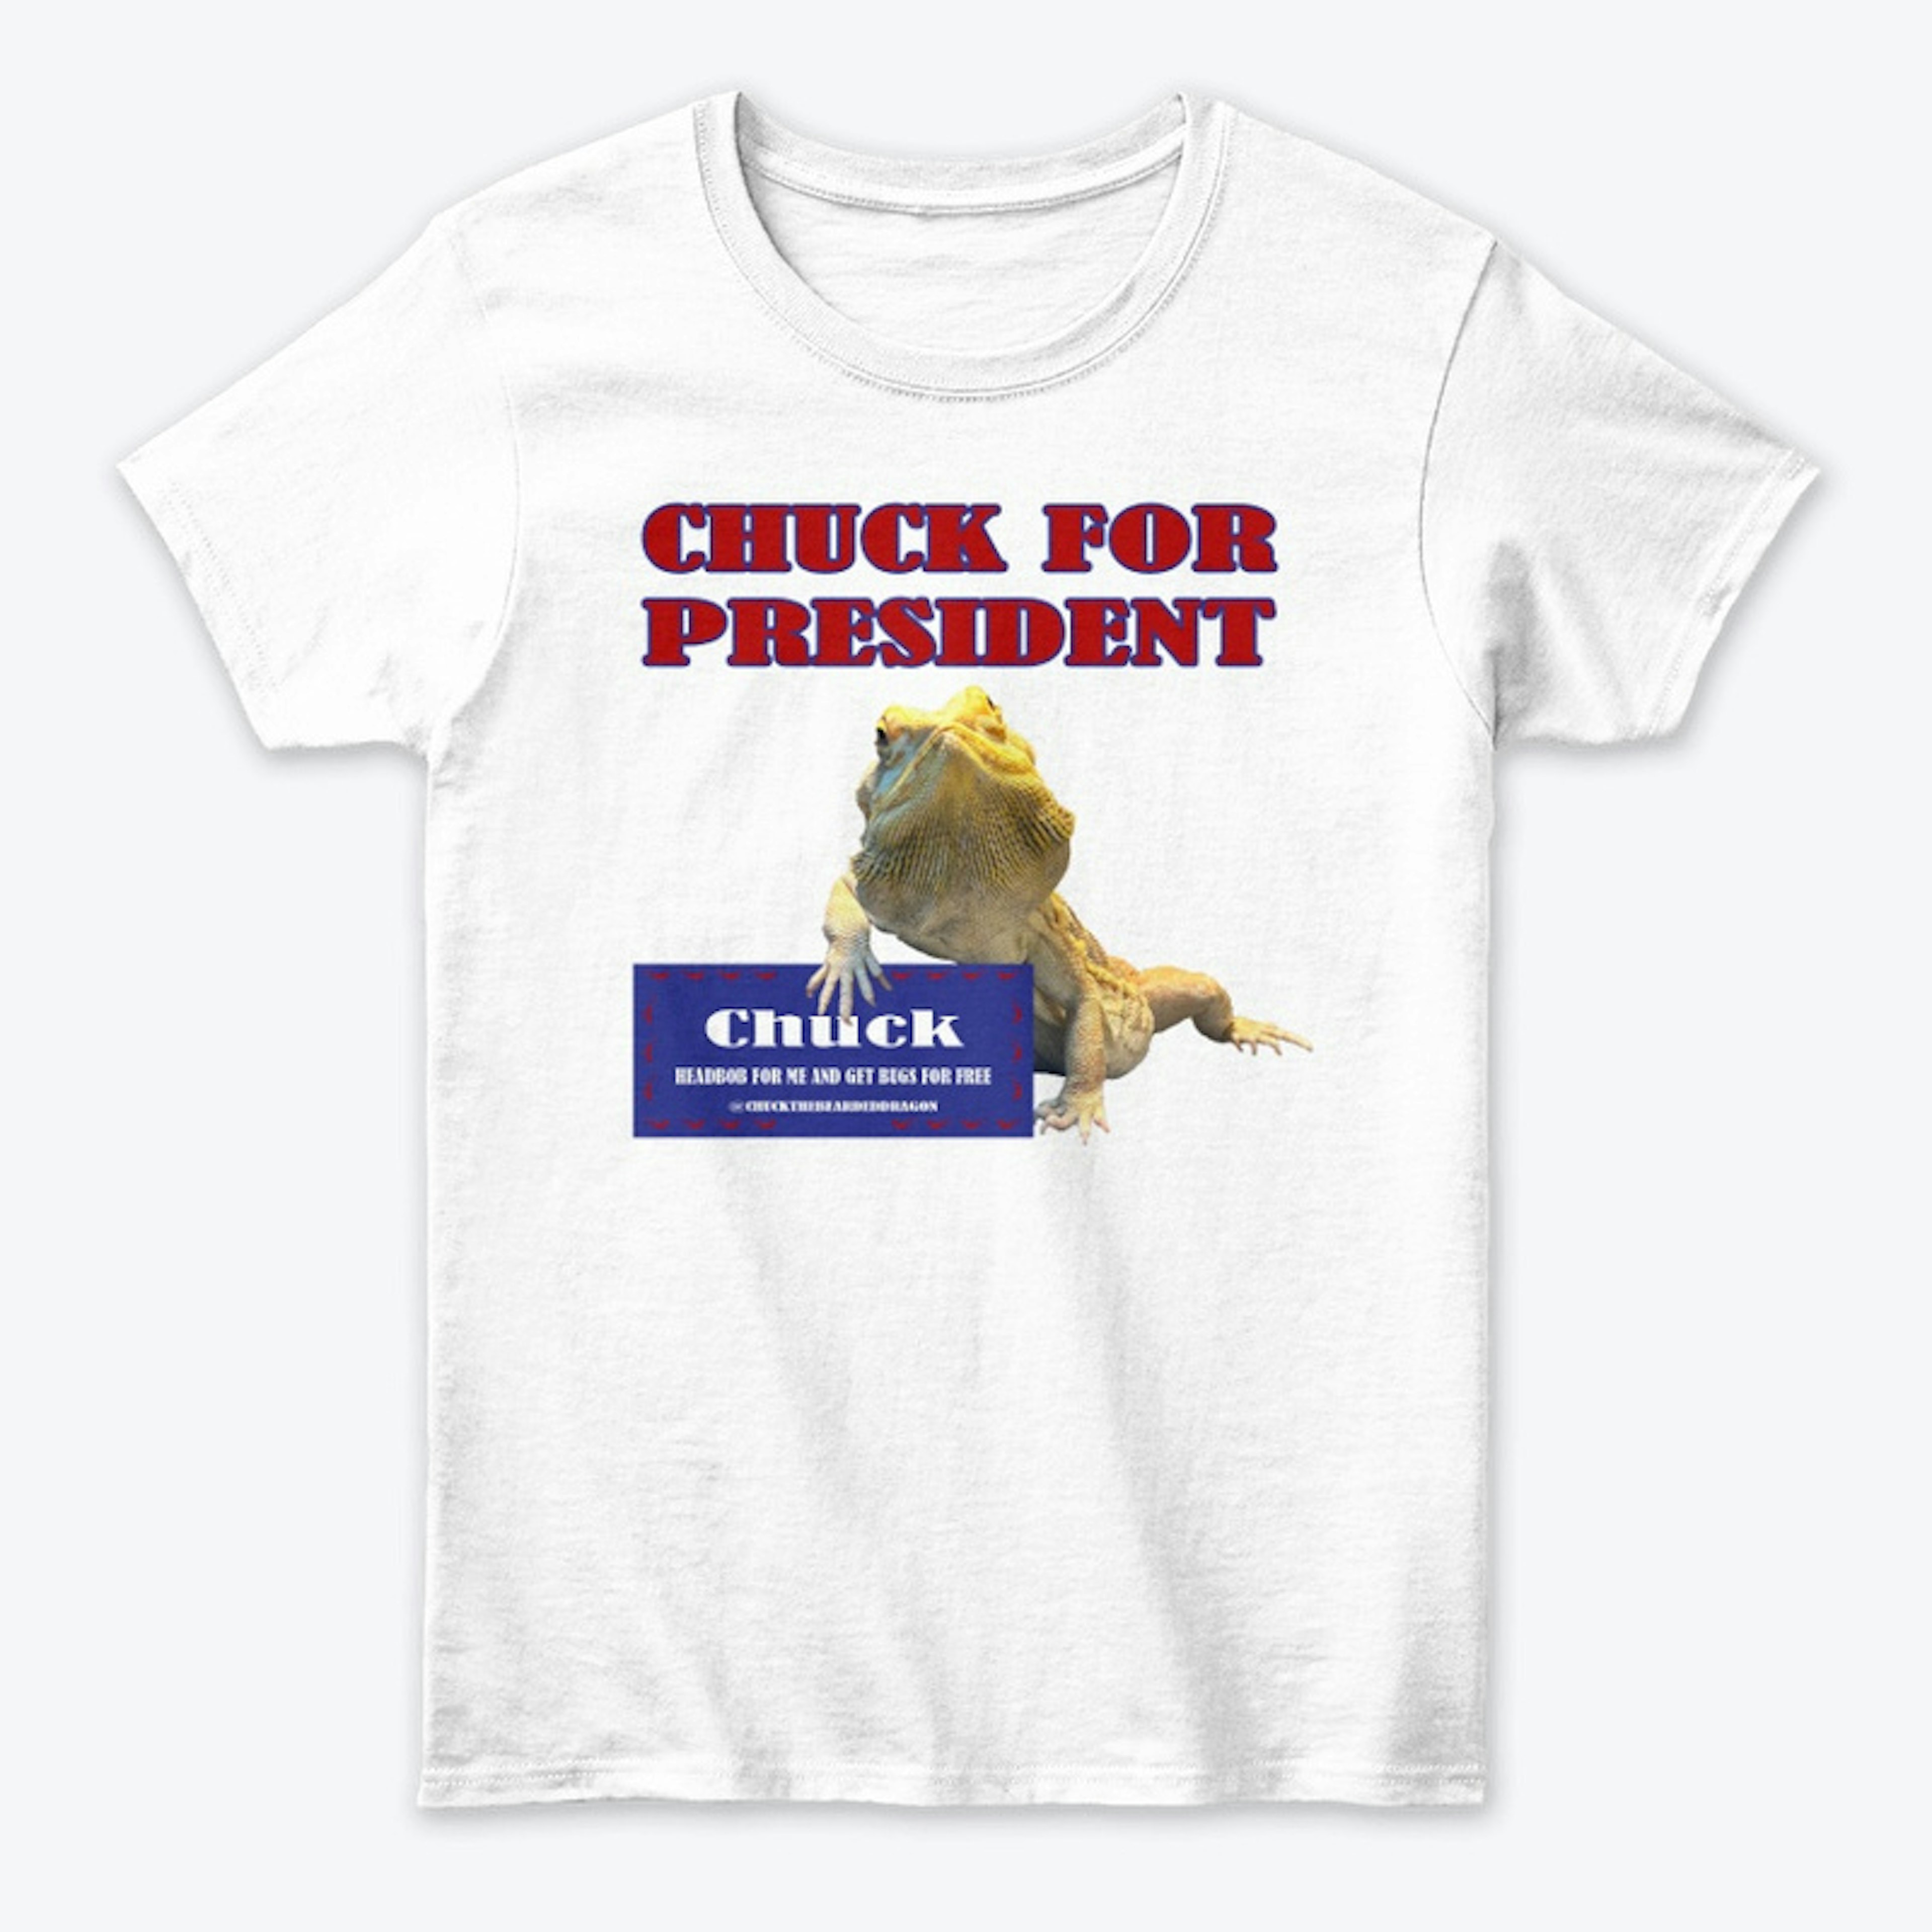 Chuck for president